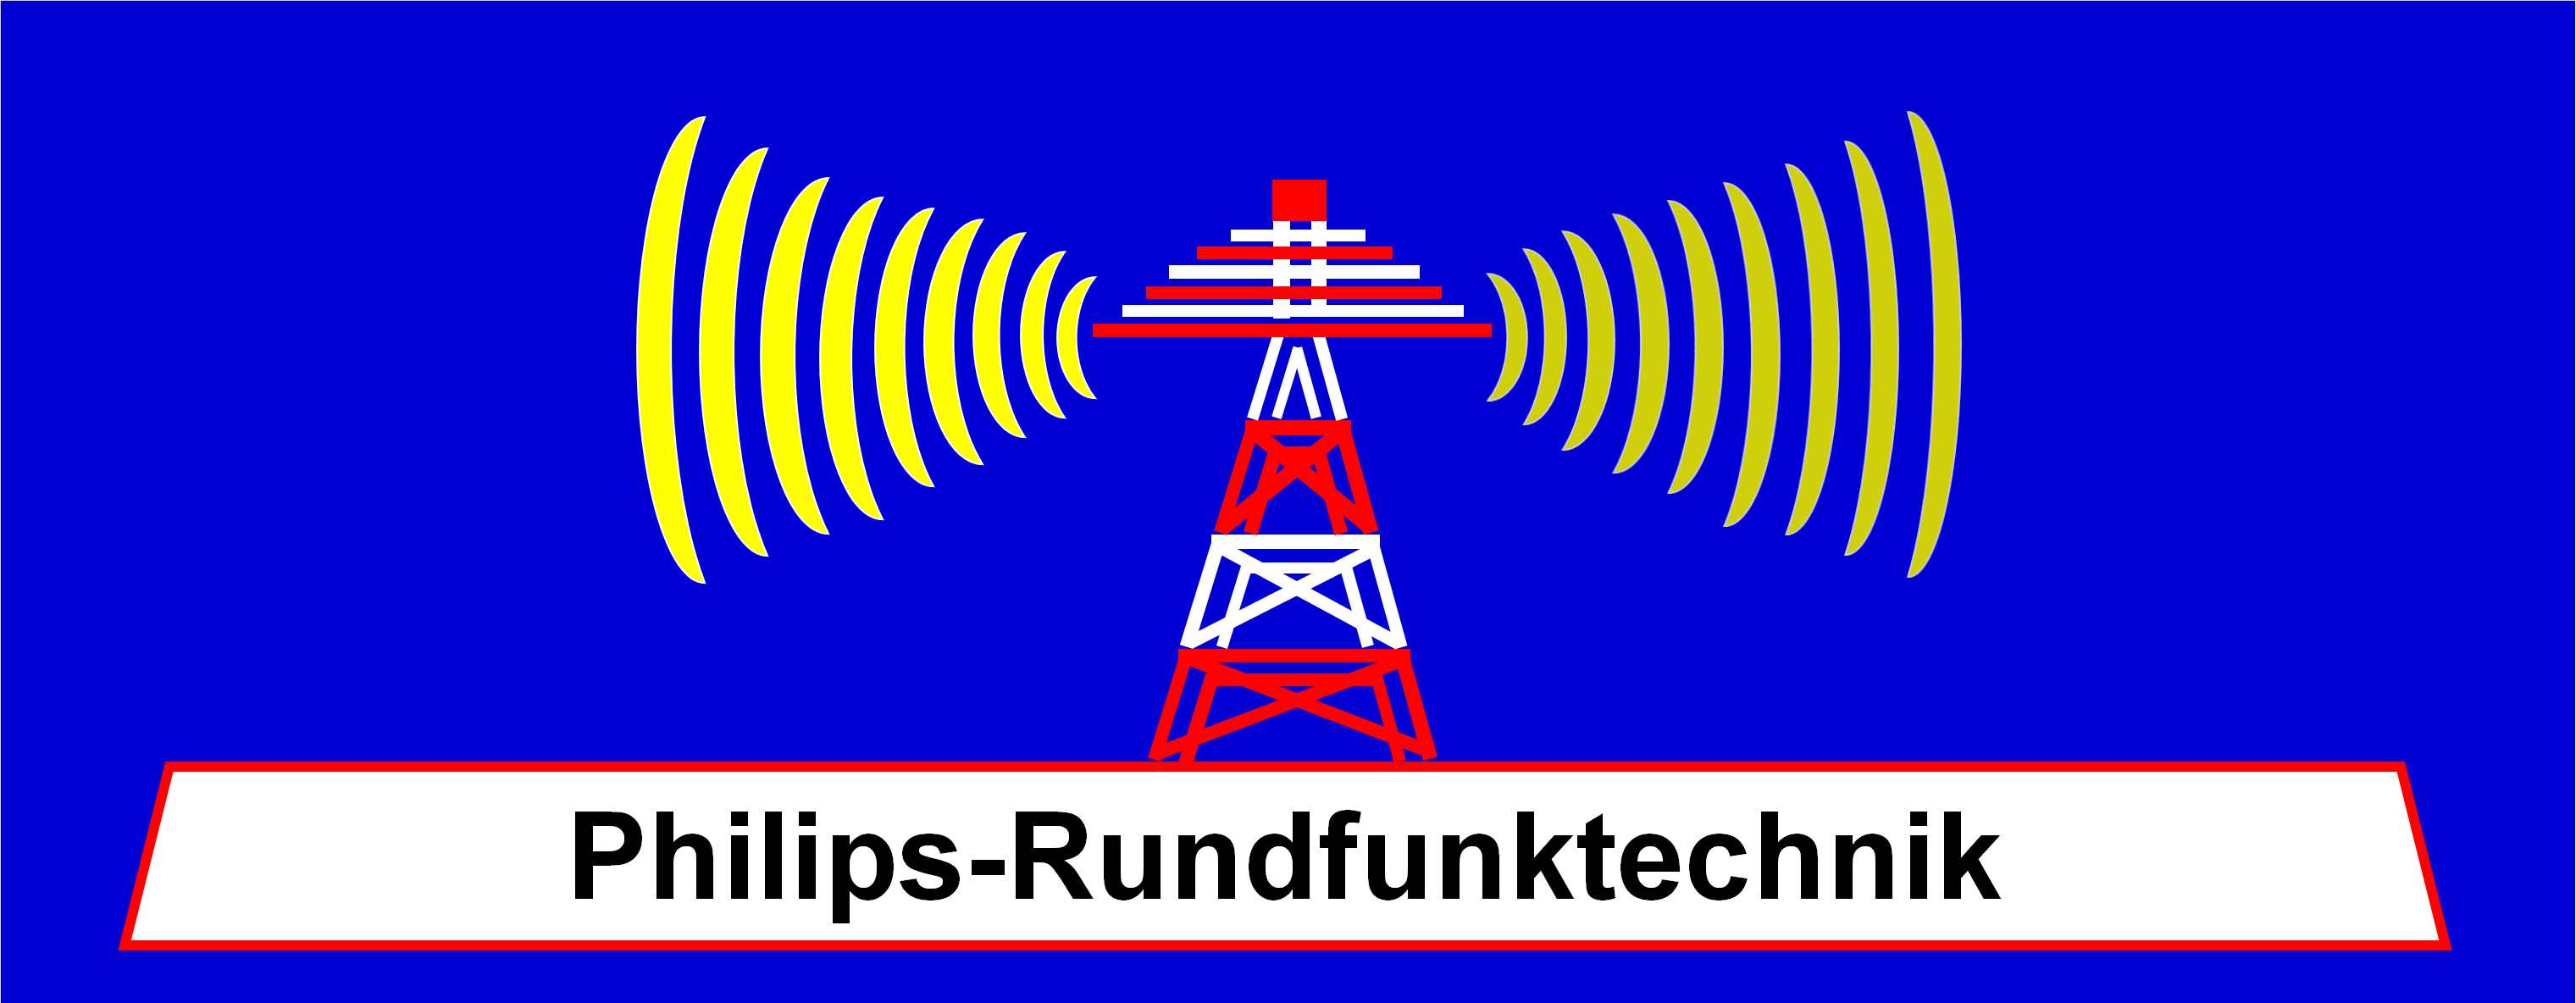 Philips-Rundfunktechnik